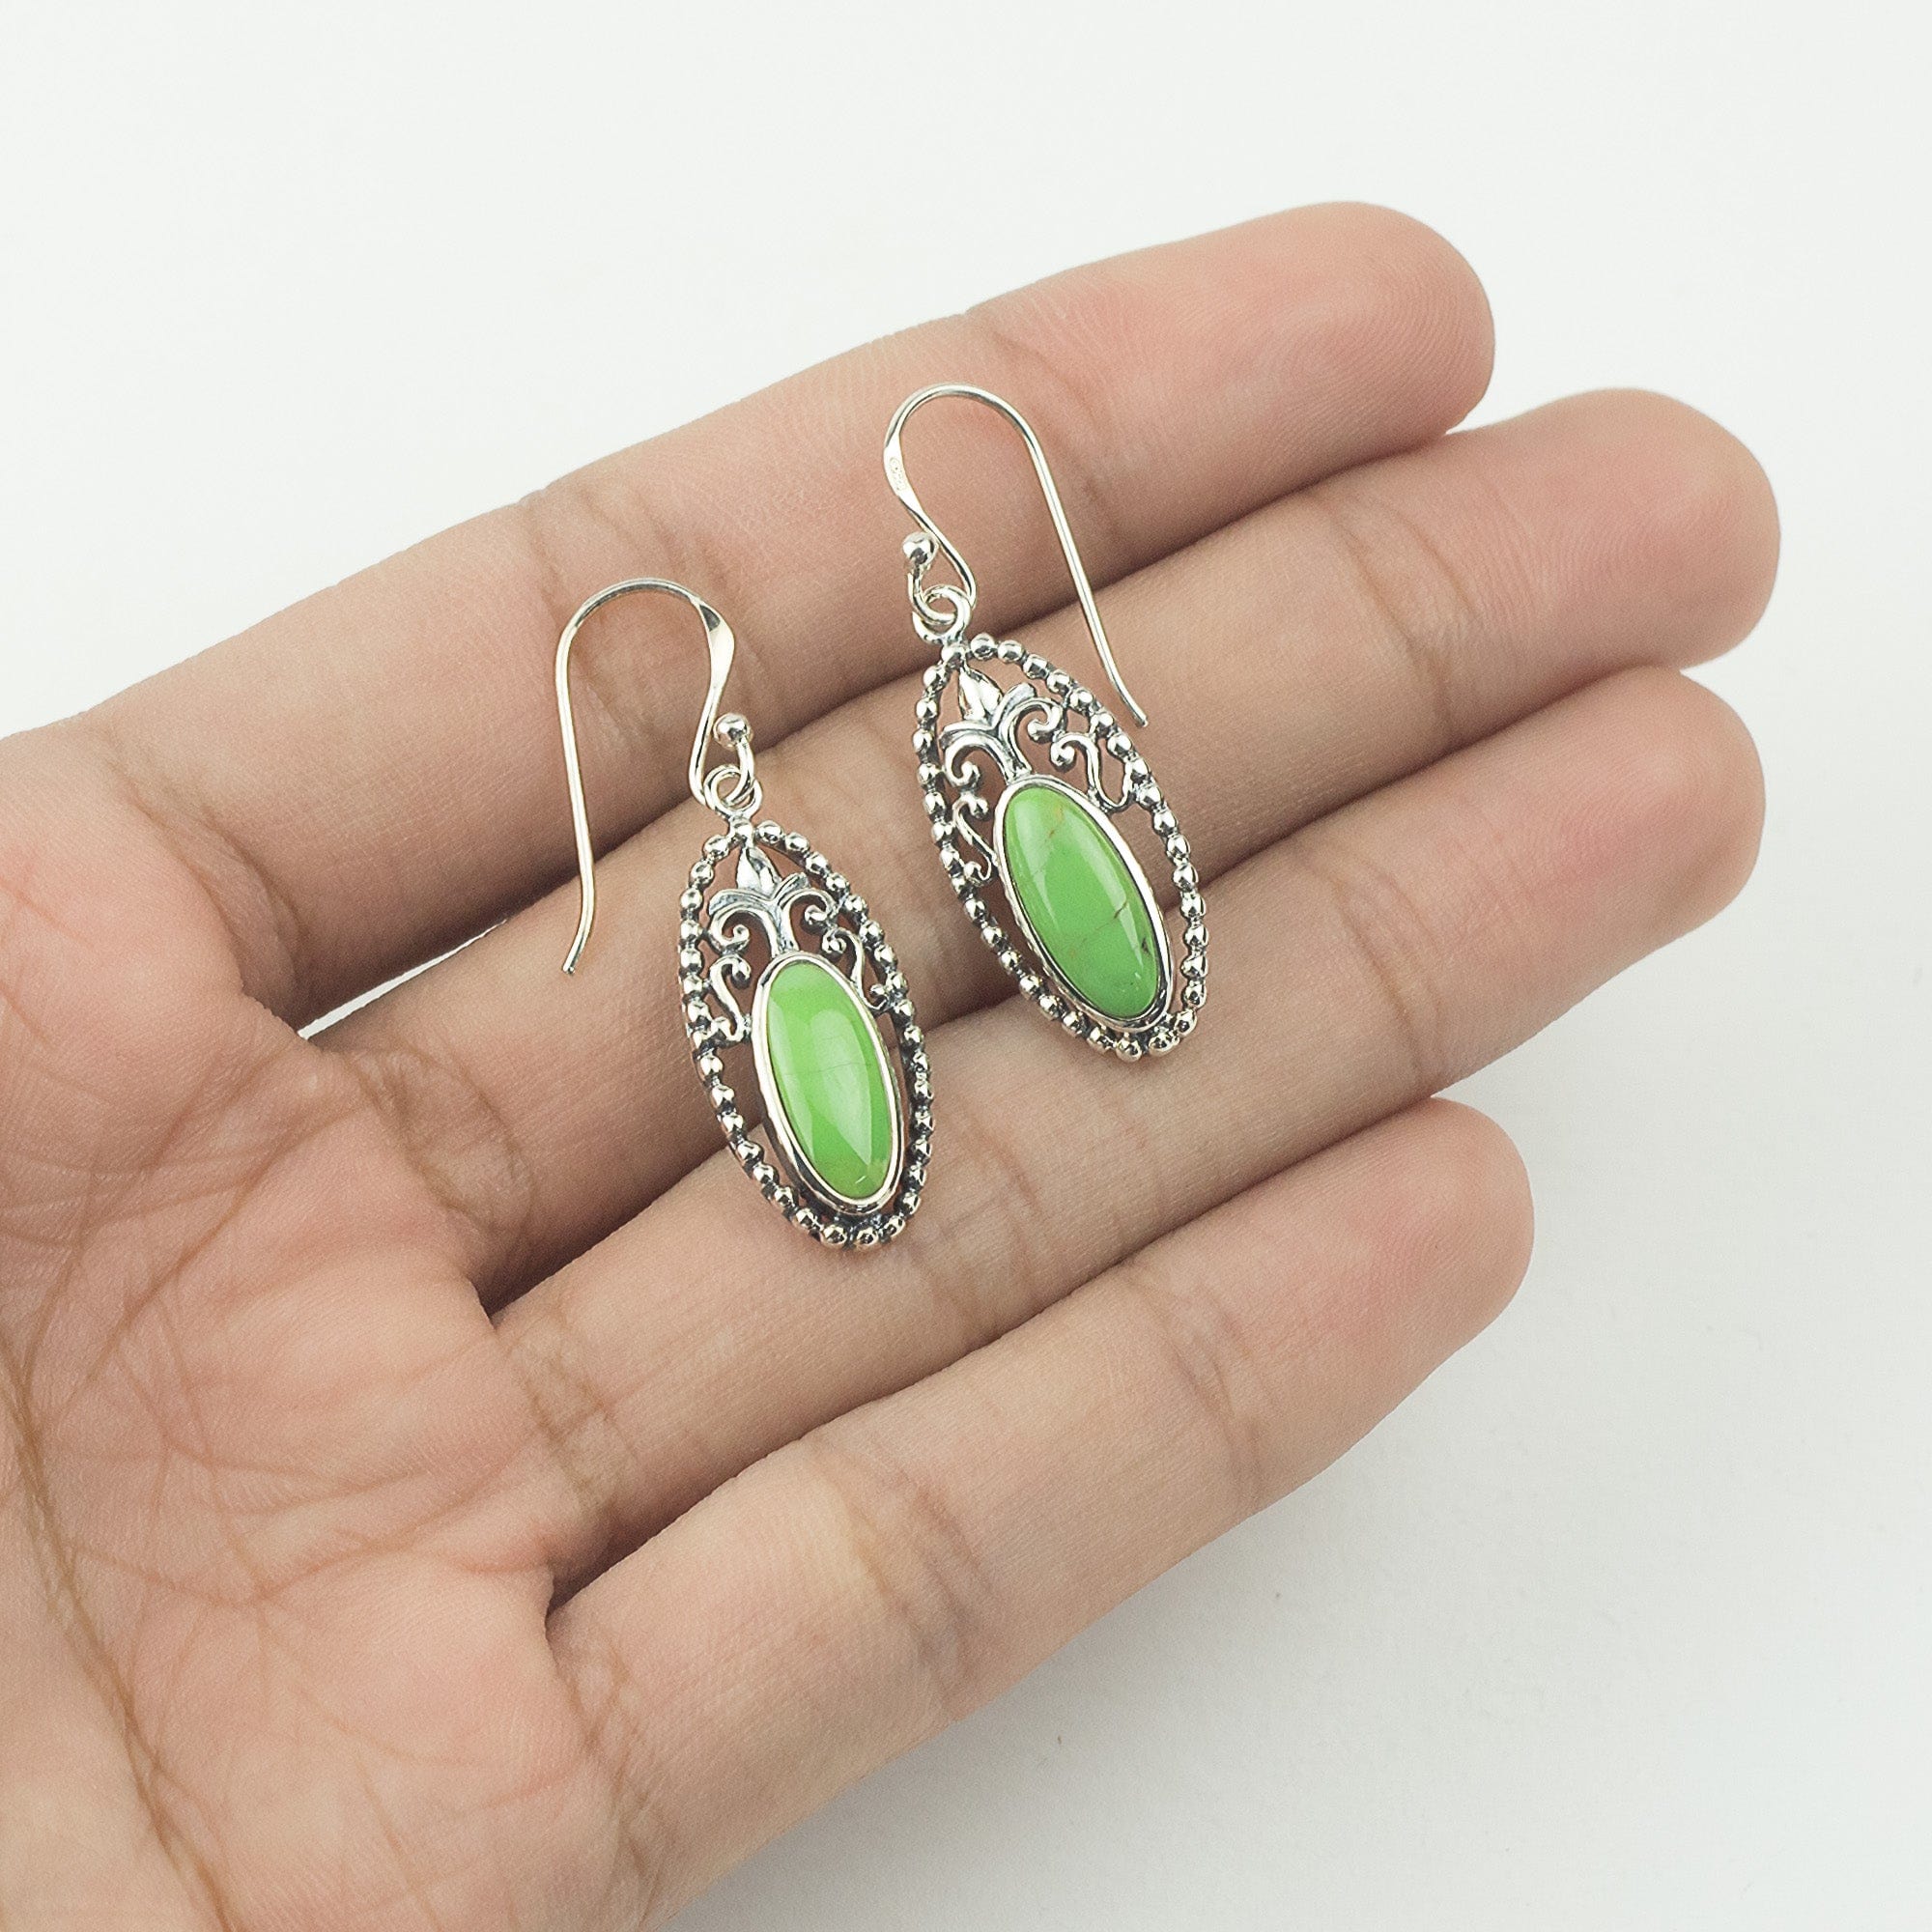 Boma Jewelry Earrings Bohemian Dangle Earrings with Stone